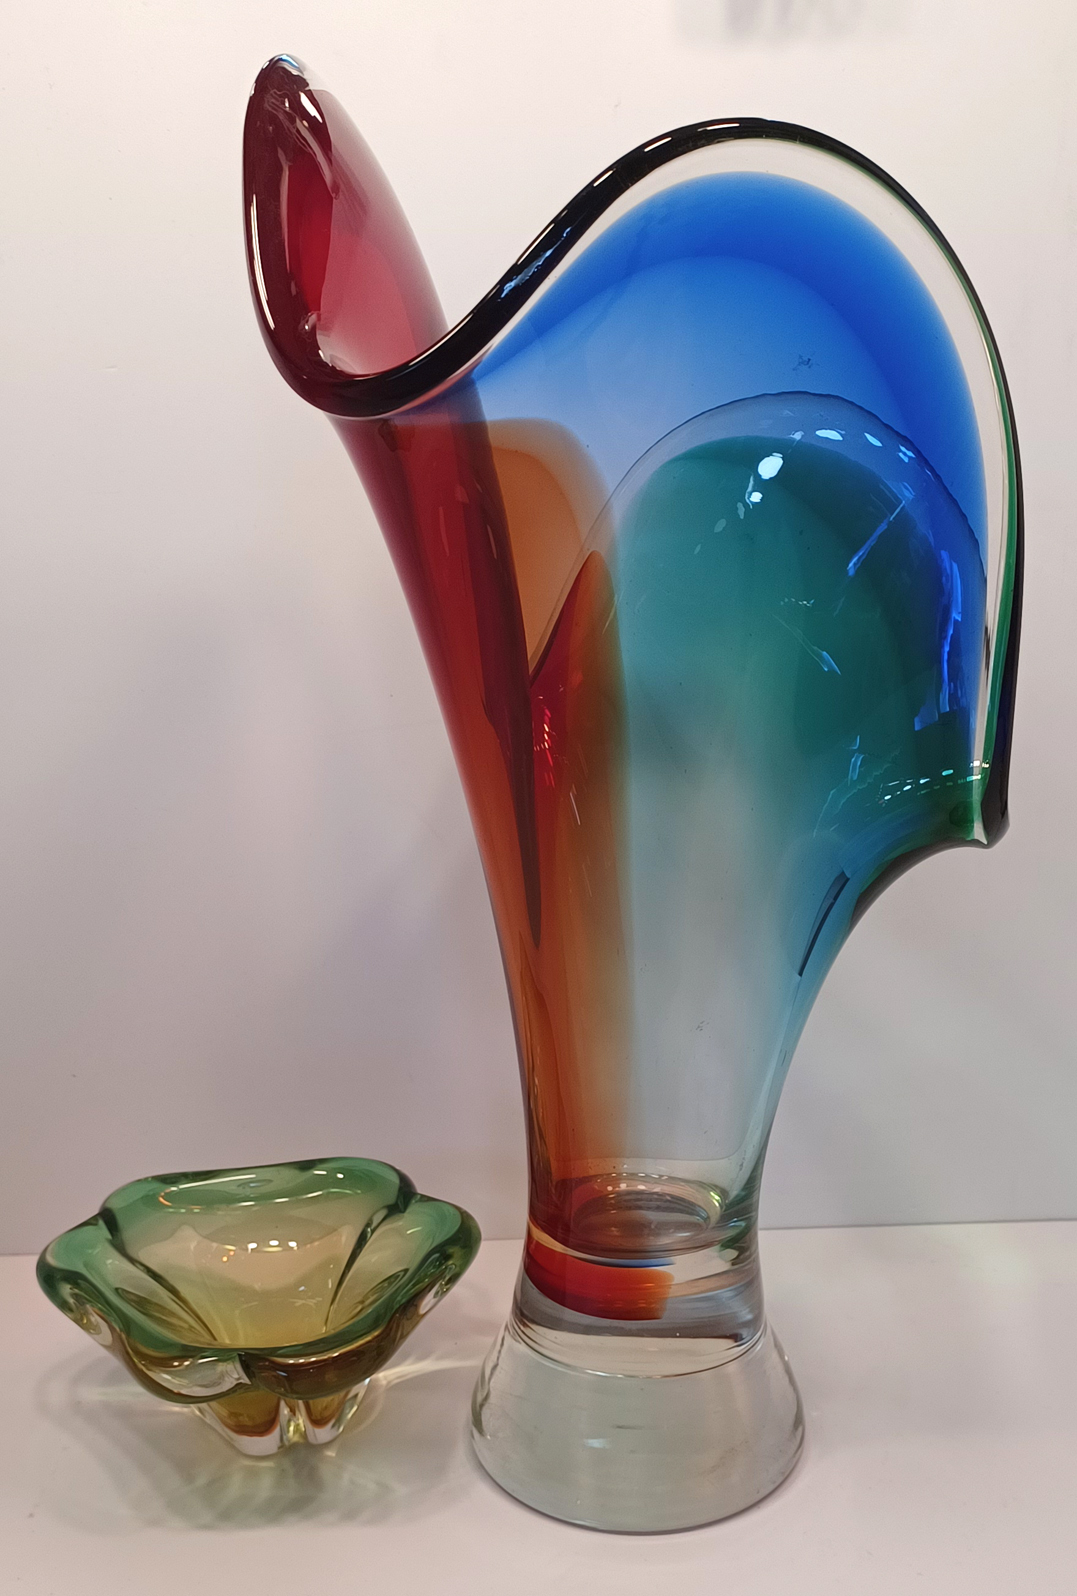 2 MURANO COLOURED ART GLASS 16" TALLEST  - Image 2 of 4